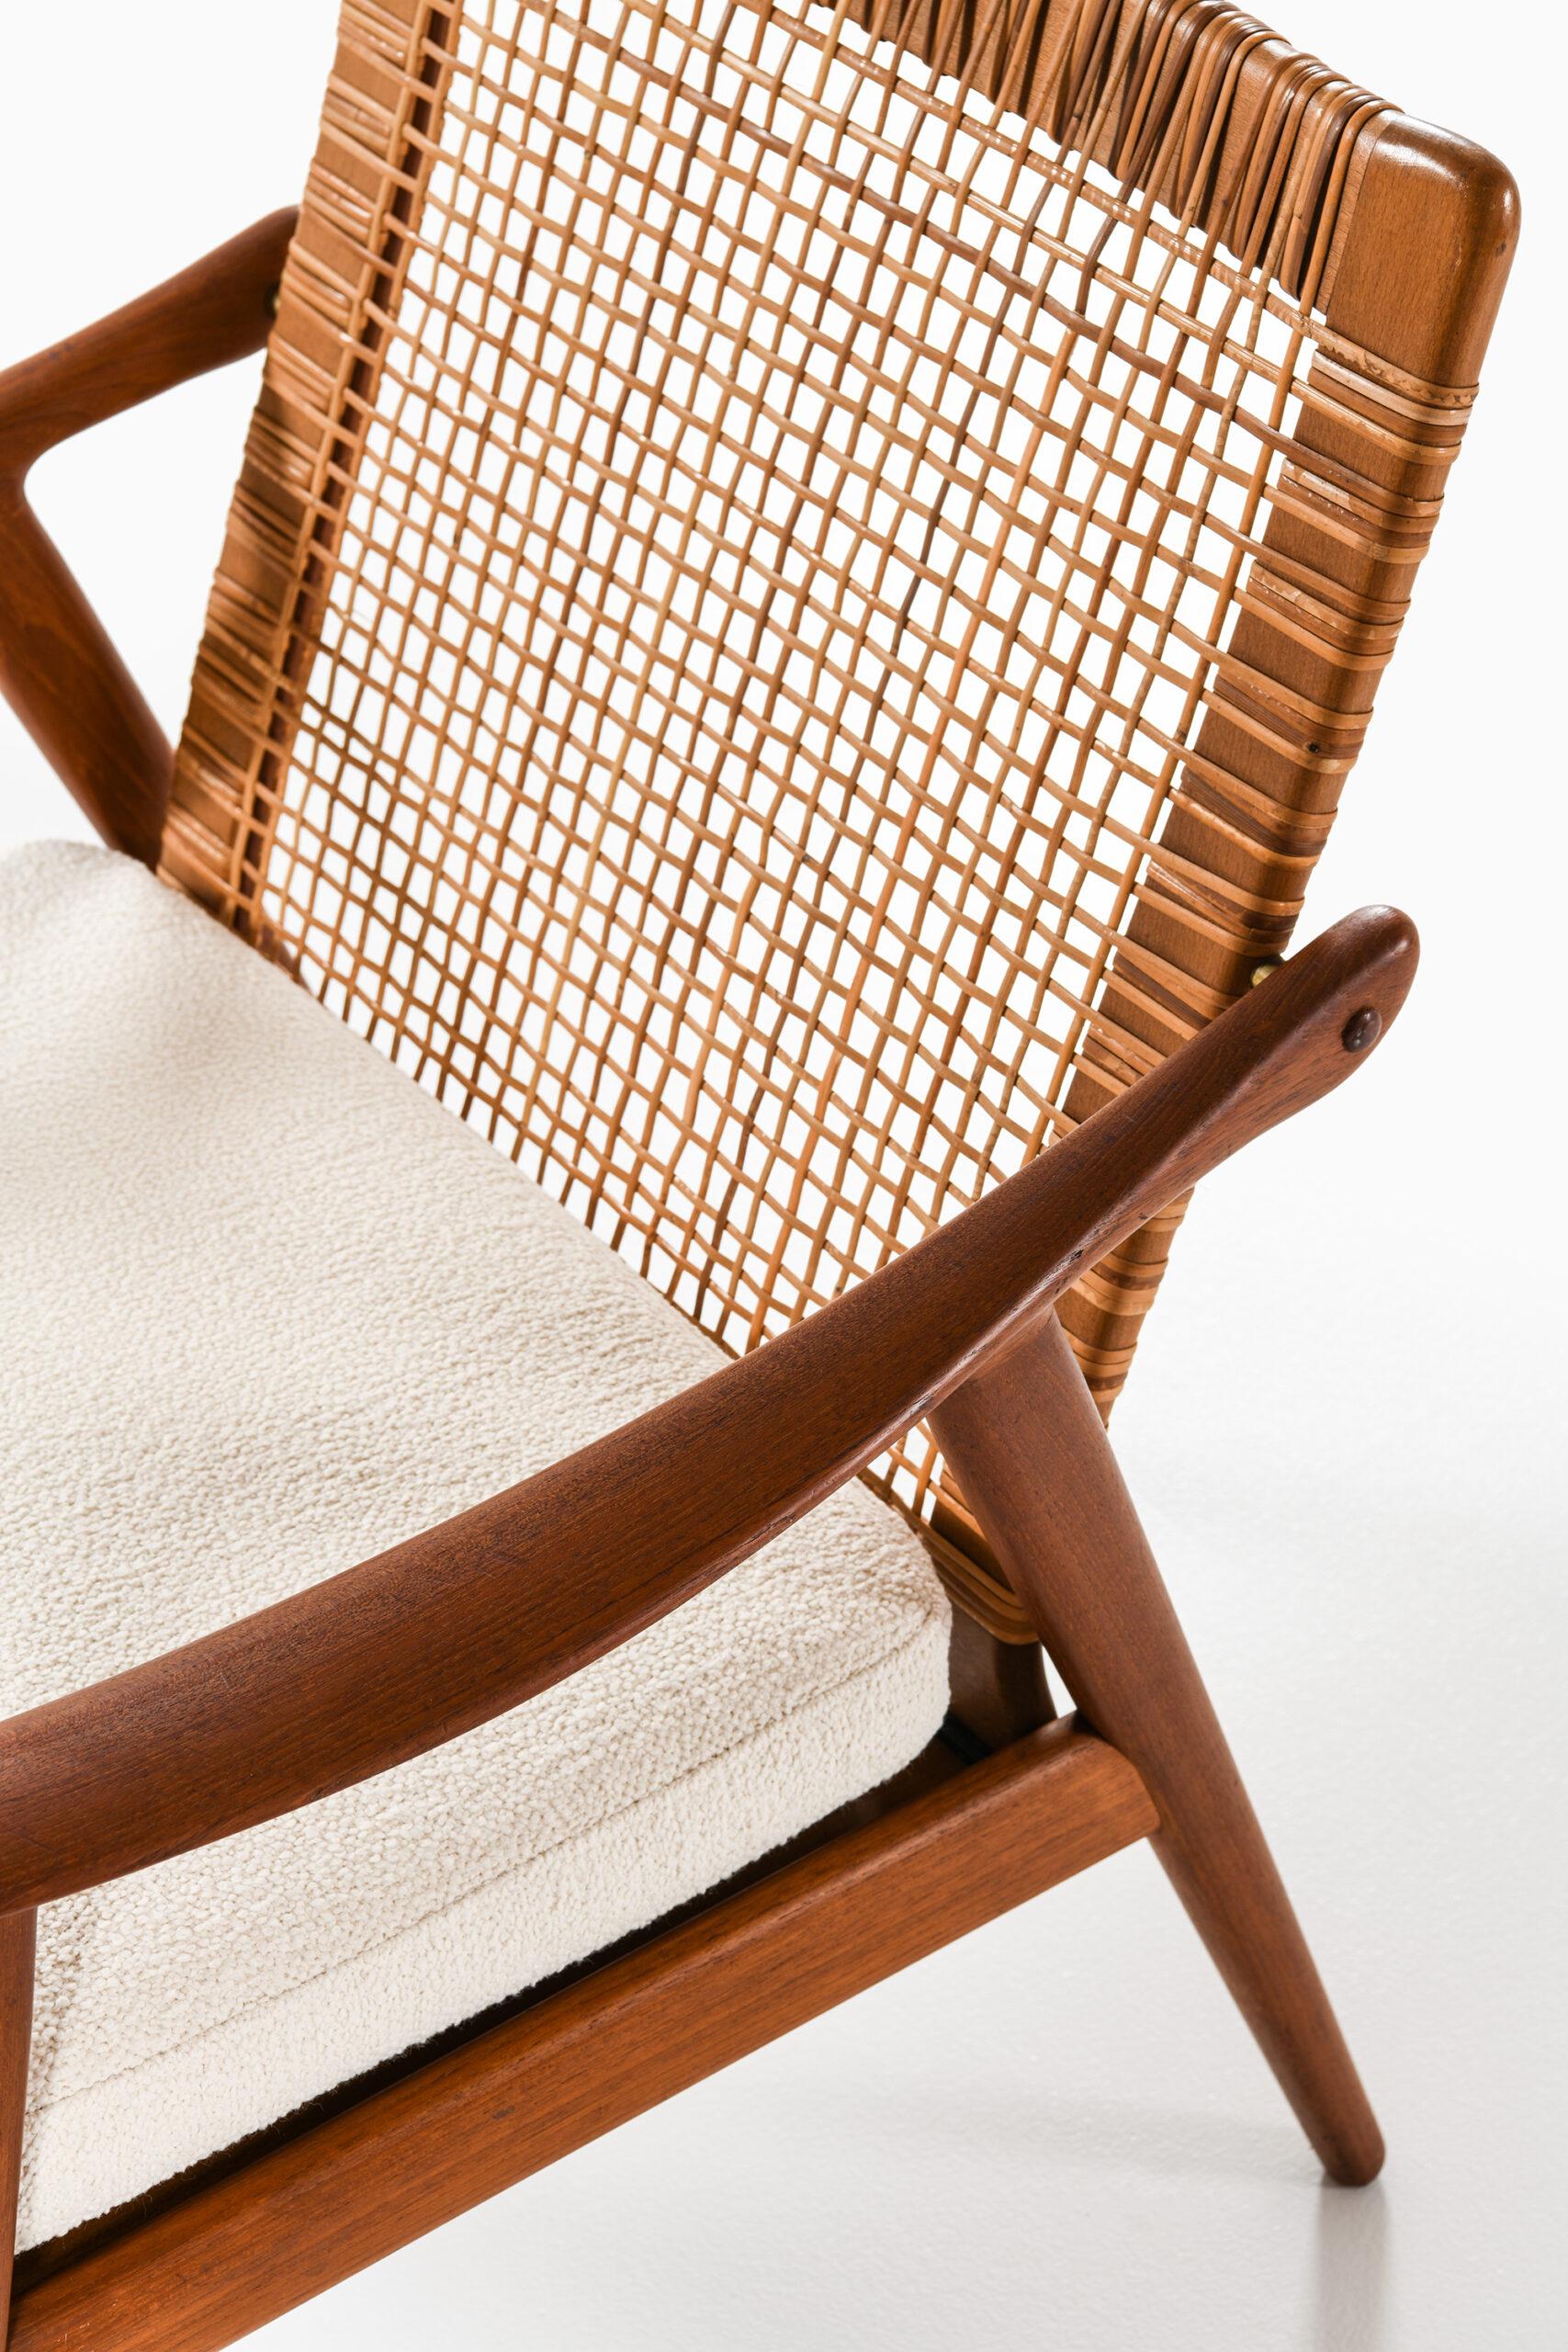 Scandinavian Modern Fredrik Kayser Easy Chair Produced by Vatne Møbler